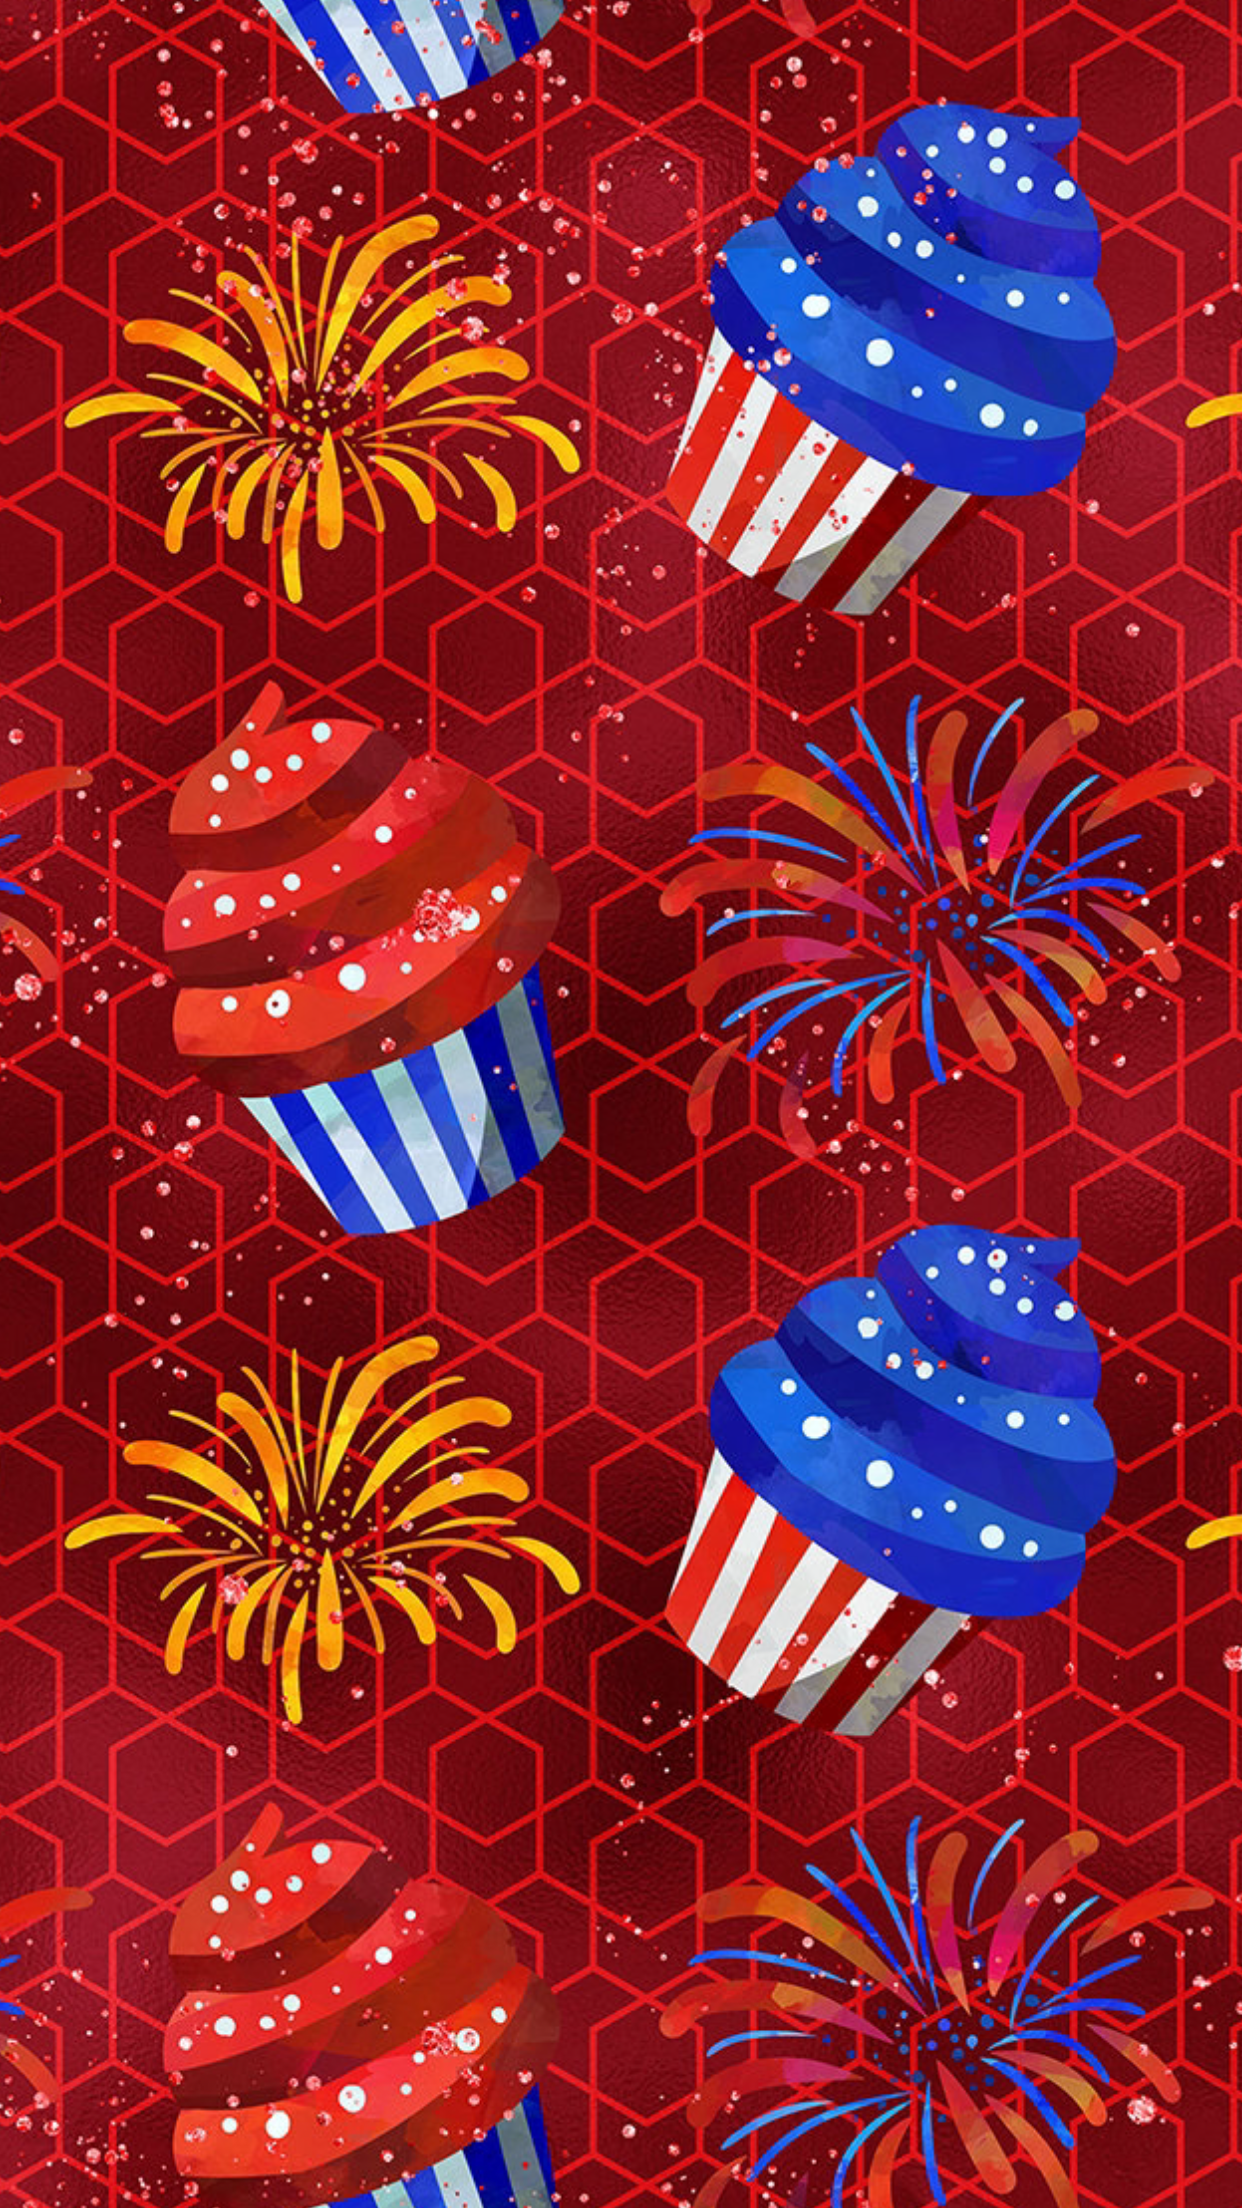 ❊ᎥᏢhσnє Ꮃαllpαpєrѕ❊. American flag wallpaper, 4th of july wallpaper, Summer wallpaper phone